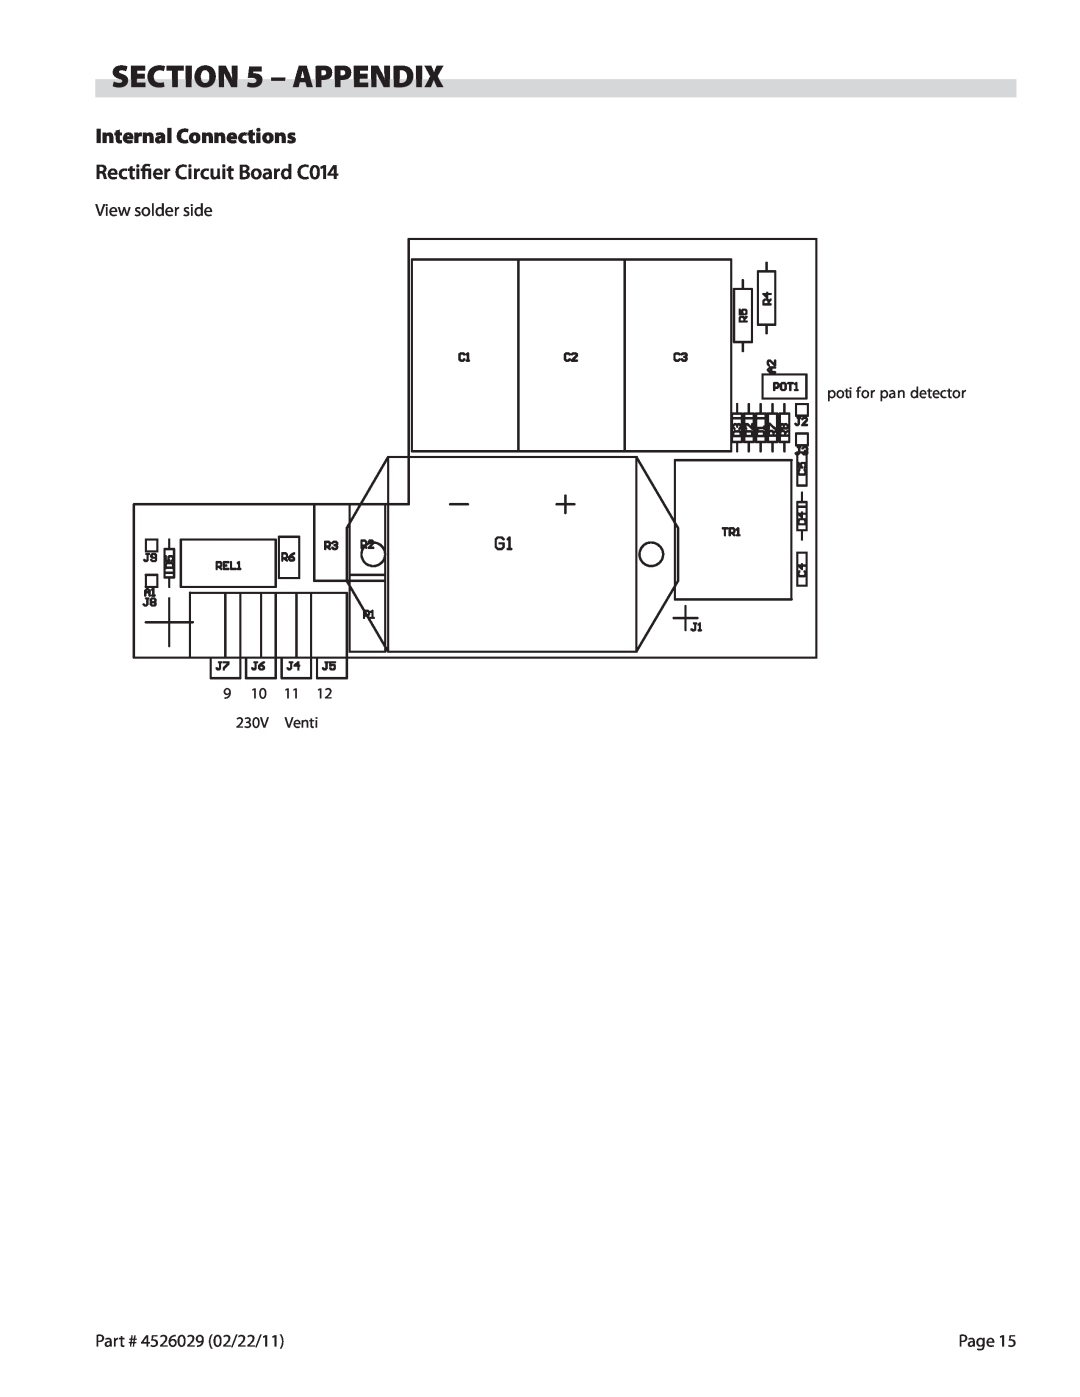 Garland 7000 service manual Appendix, Internal Connections Rectifier Circuit Board C014, poti for pan detector, 230V, Venti 